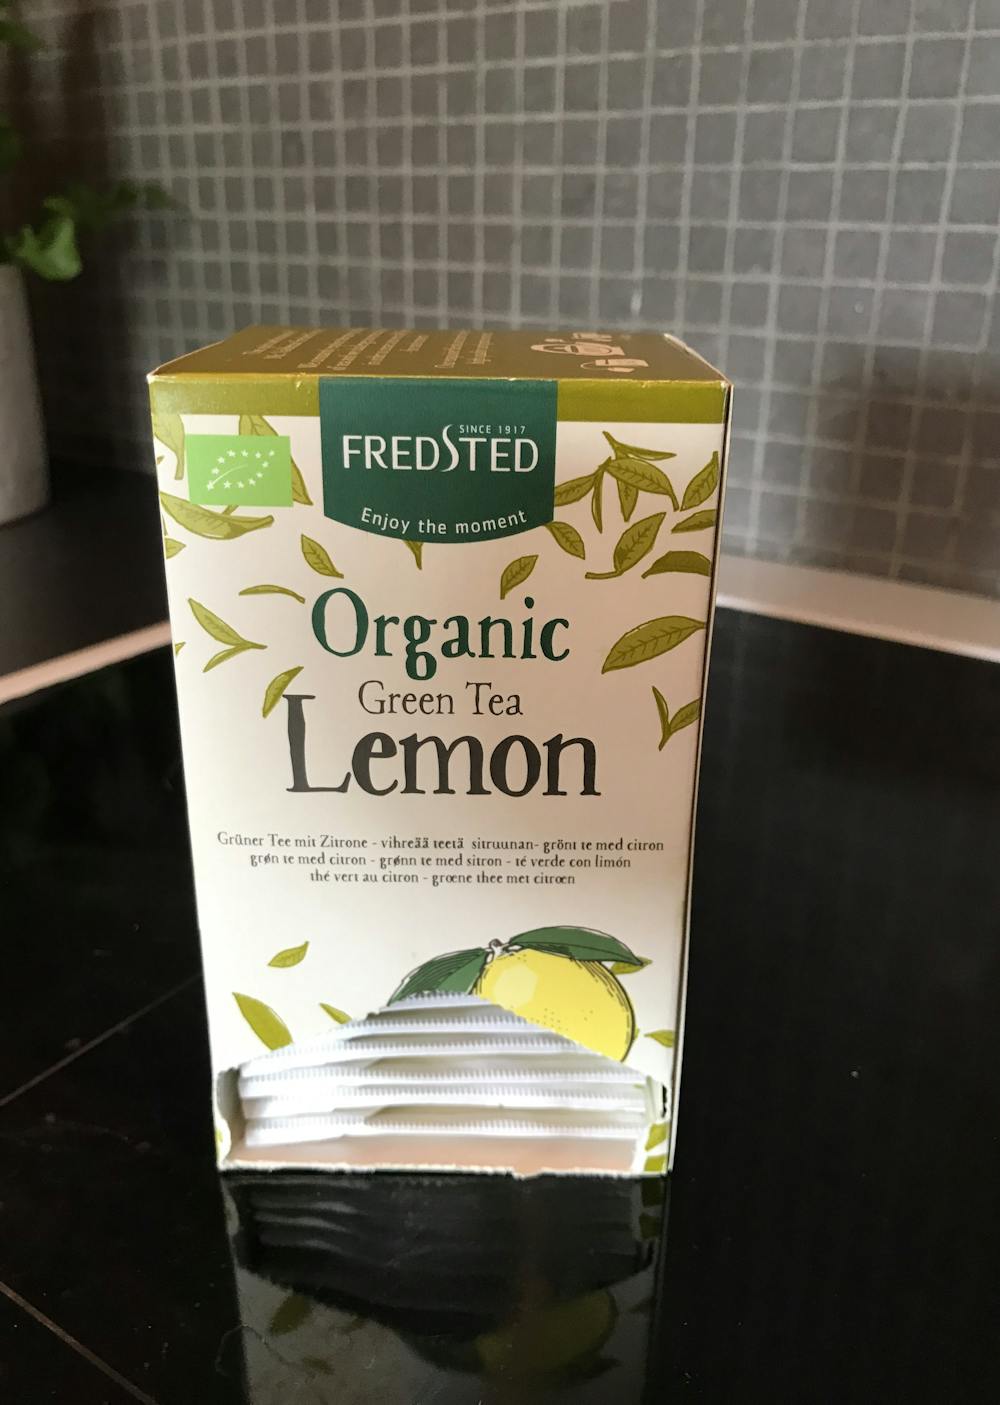 Organic green tea lemon, Frested